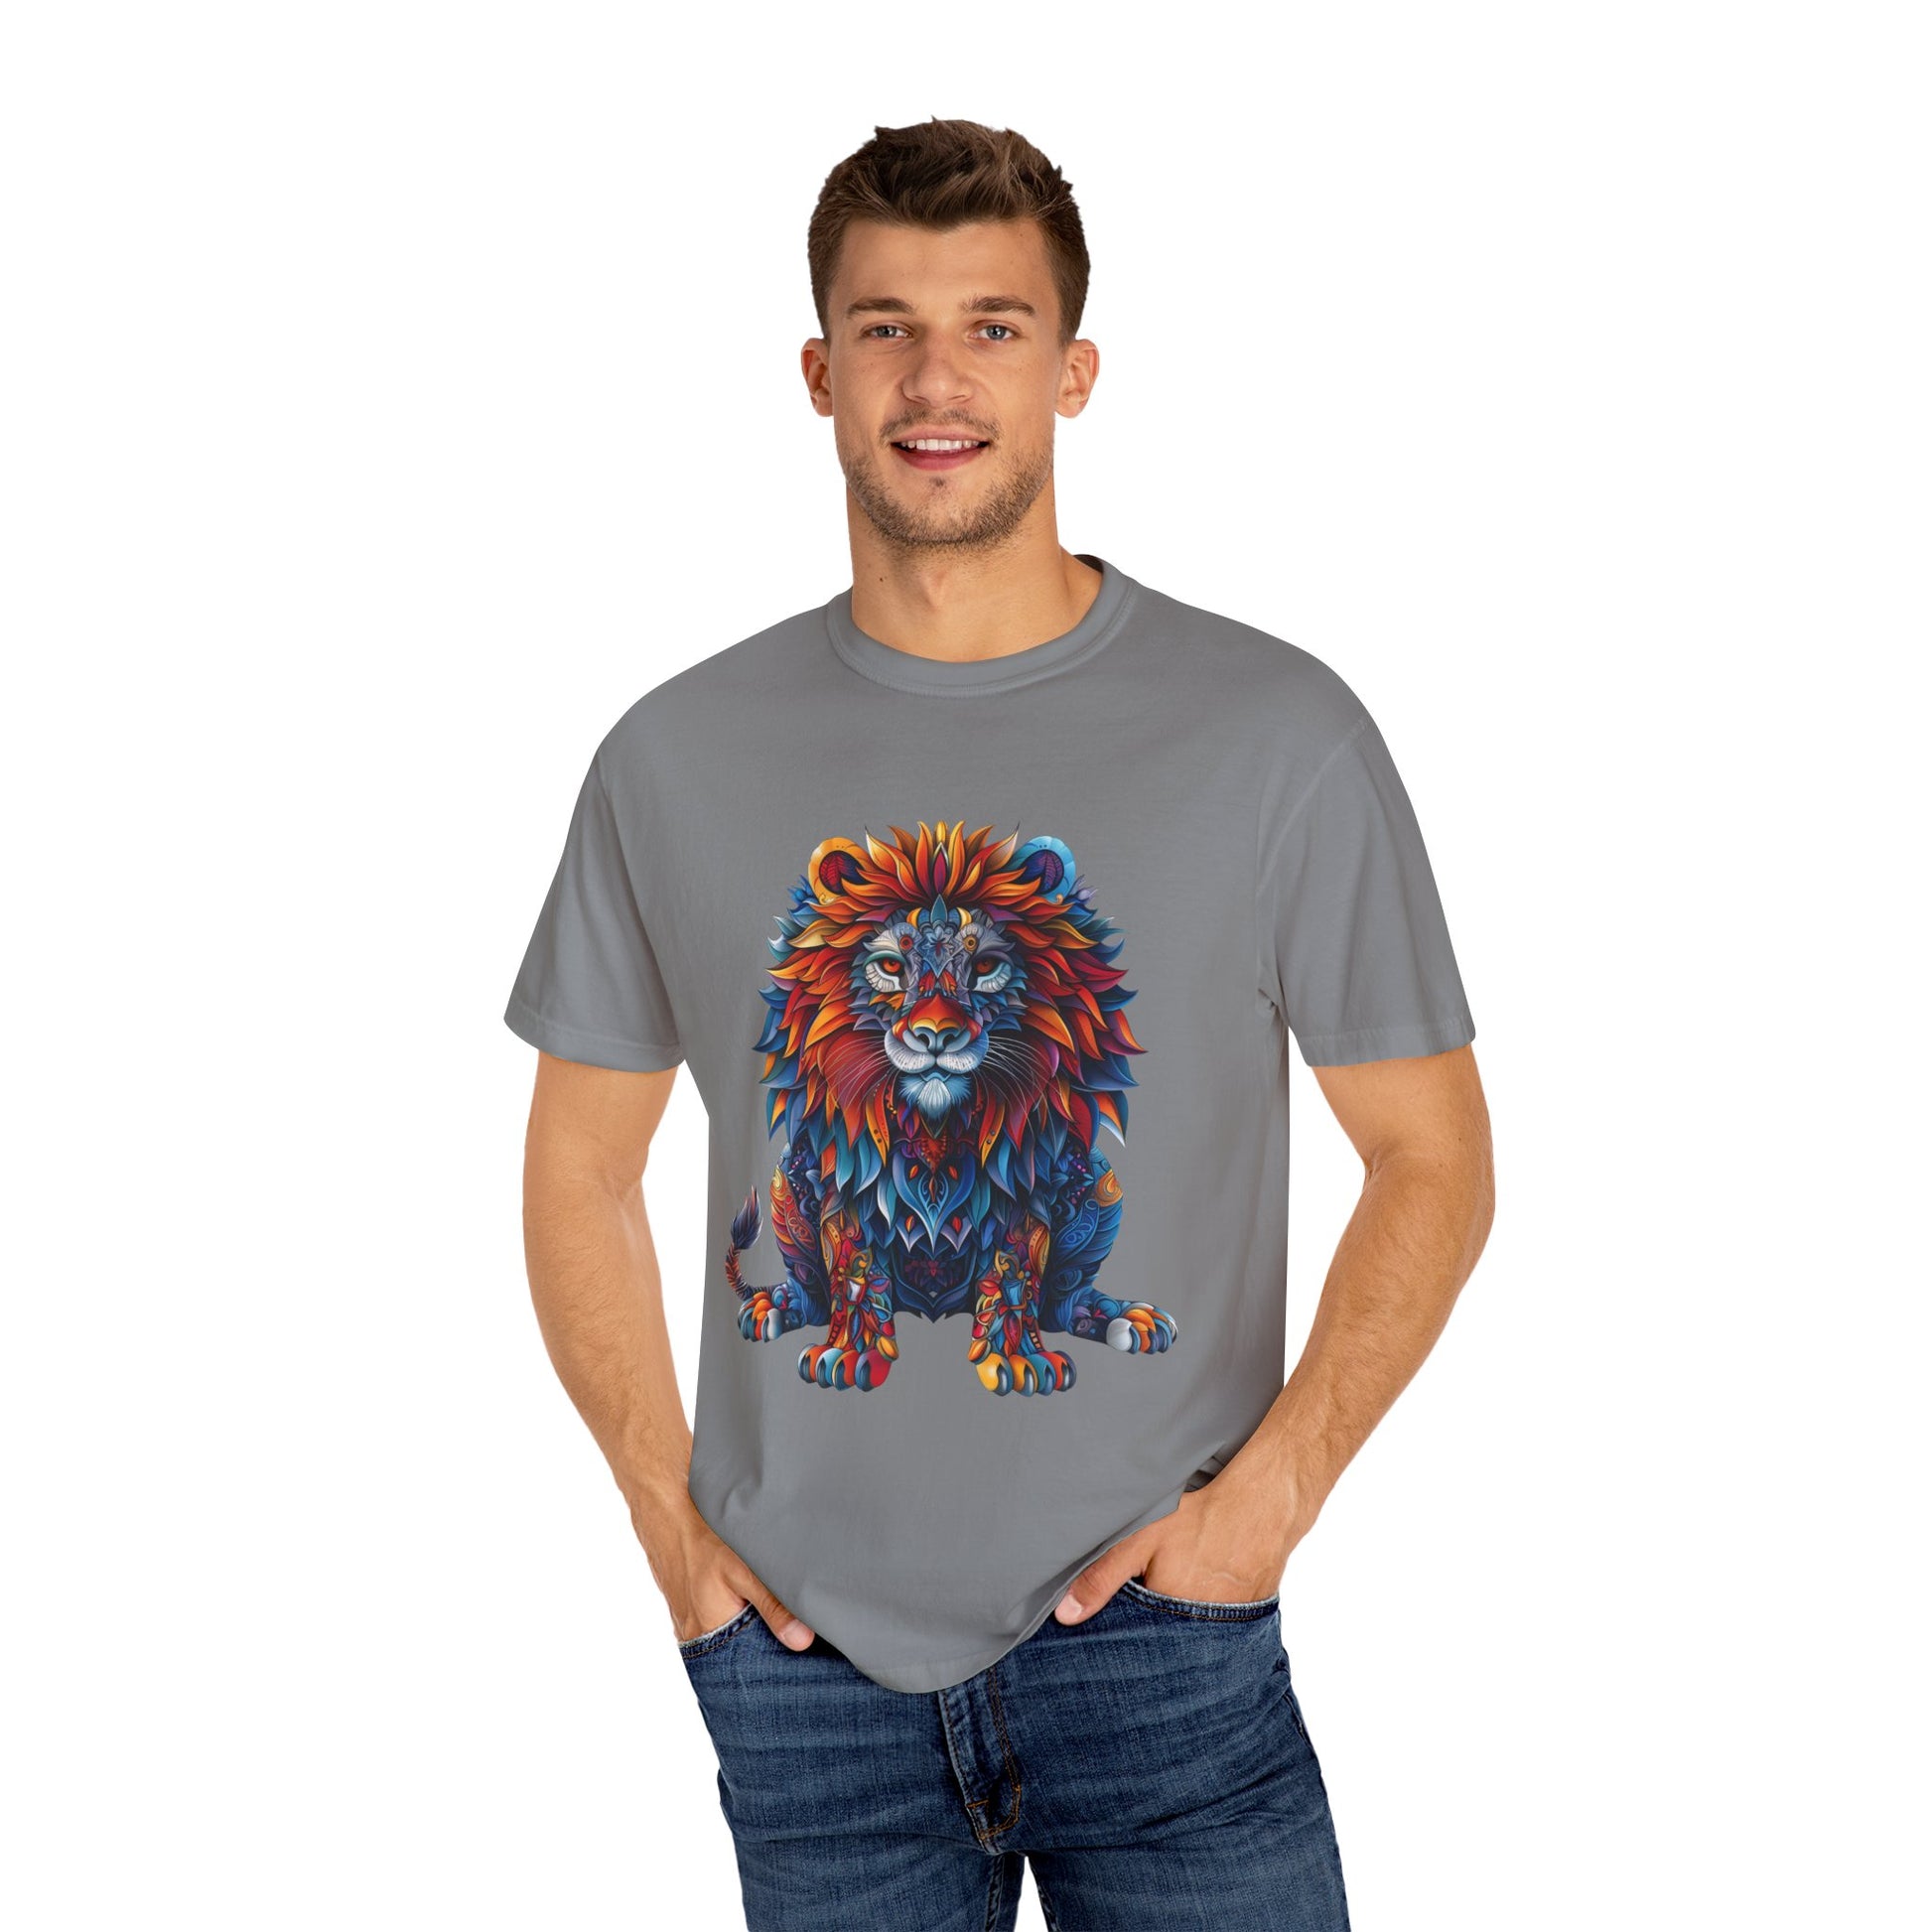 Lion Head Cool Graphic Design Novelty Unisex Garment-dyed T-shirt Cotton Funny Humorous Graphic Soft Premium Unisex Men Women Grey T-shirt Birthday Gift-42